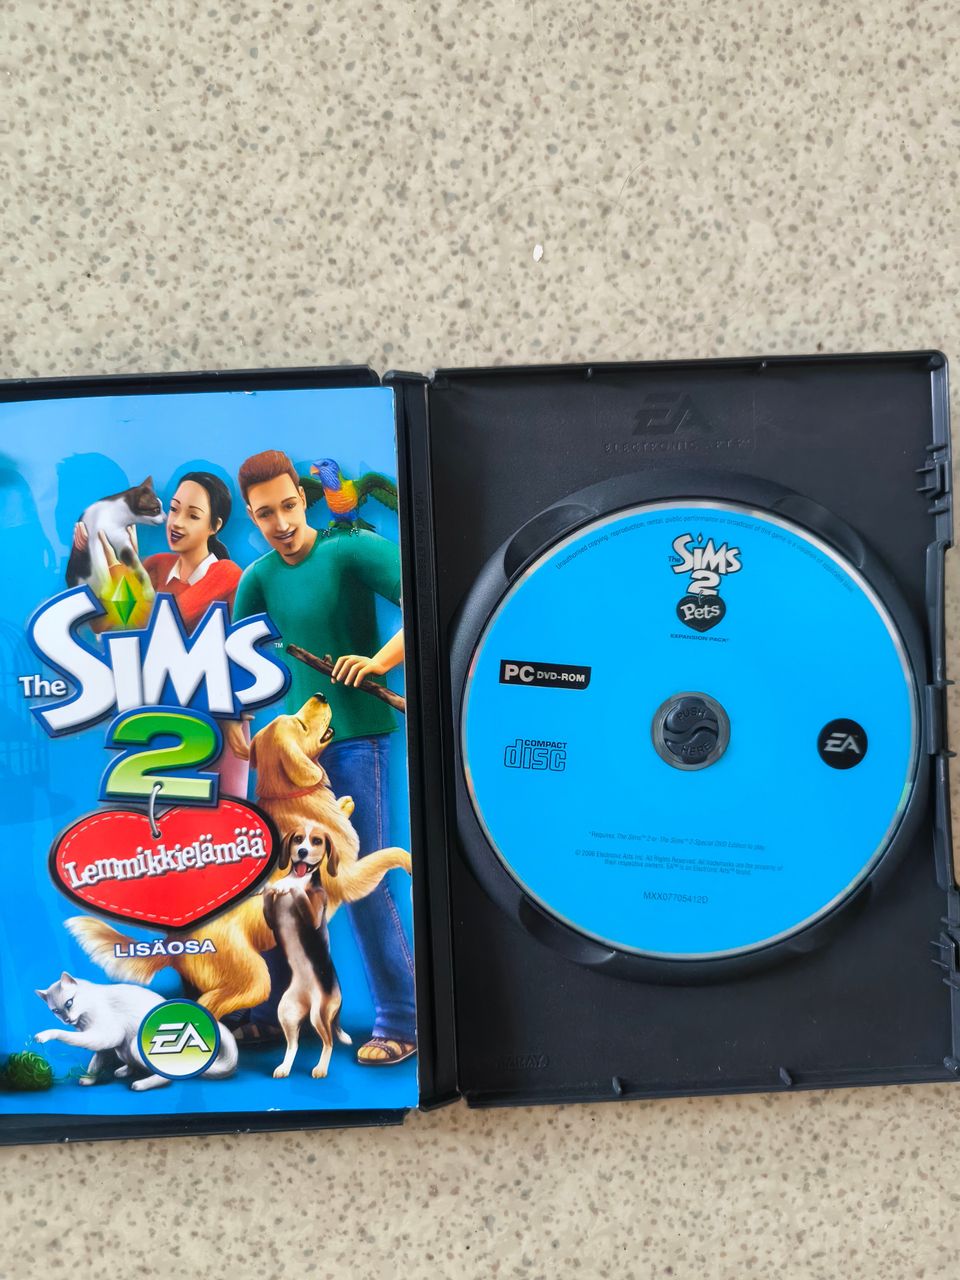 Sims pellet game dvd